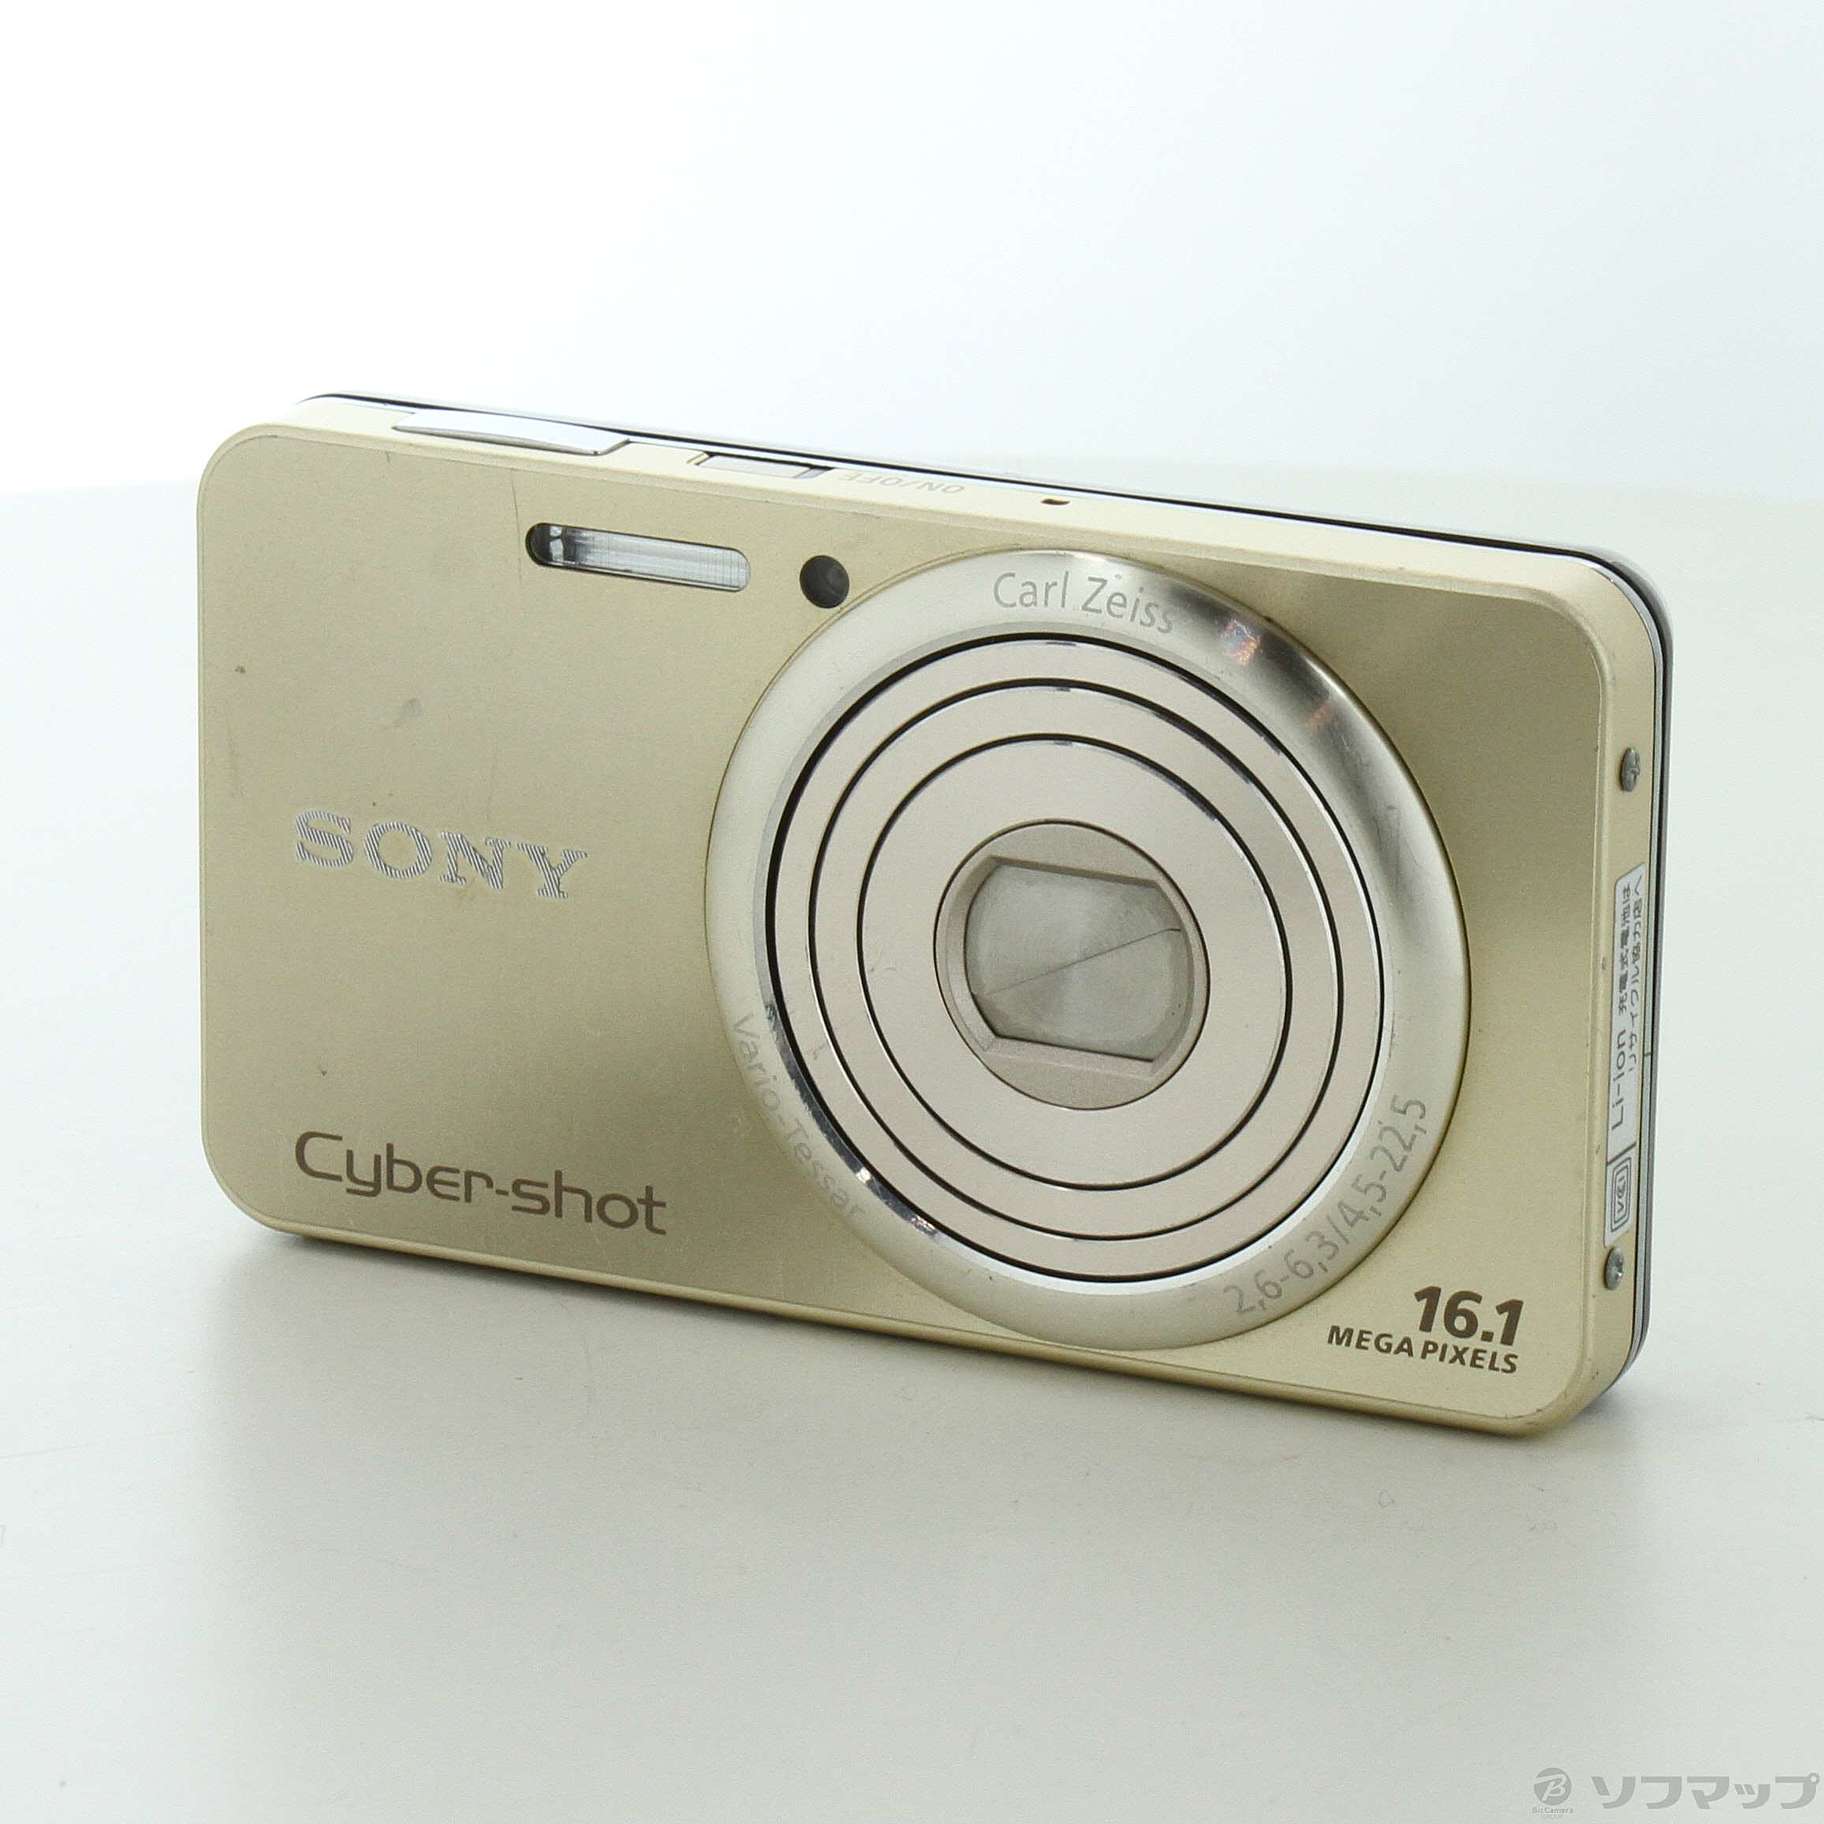 SONY DSC-W570 Cyber-shot デジタルカメラ - デジタルカメラ